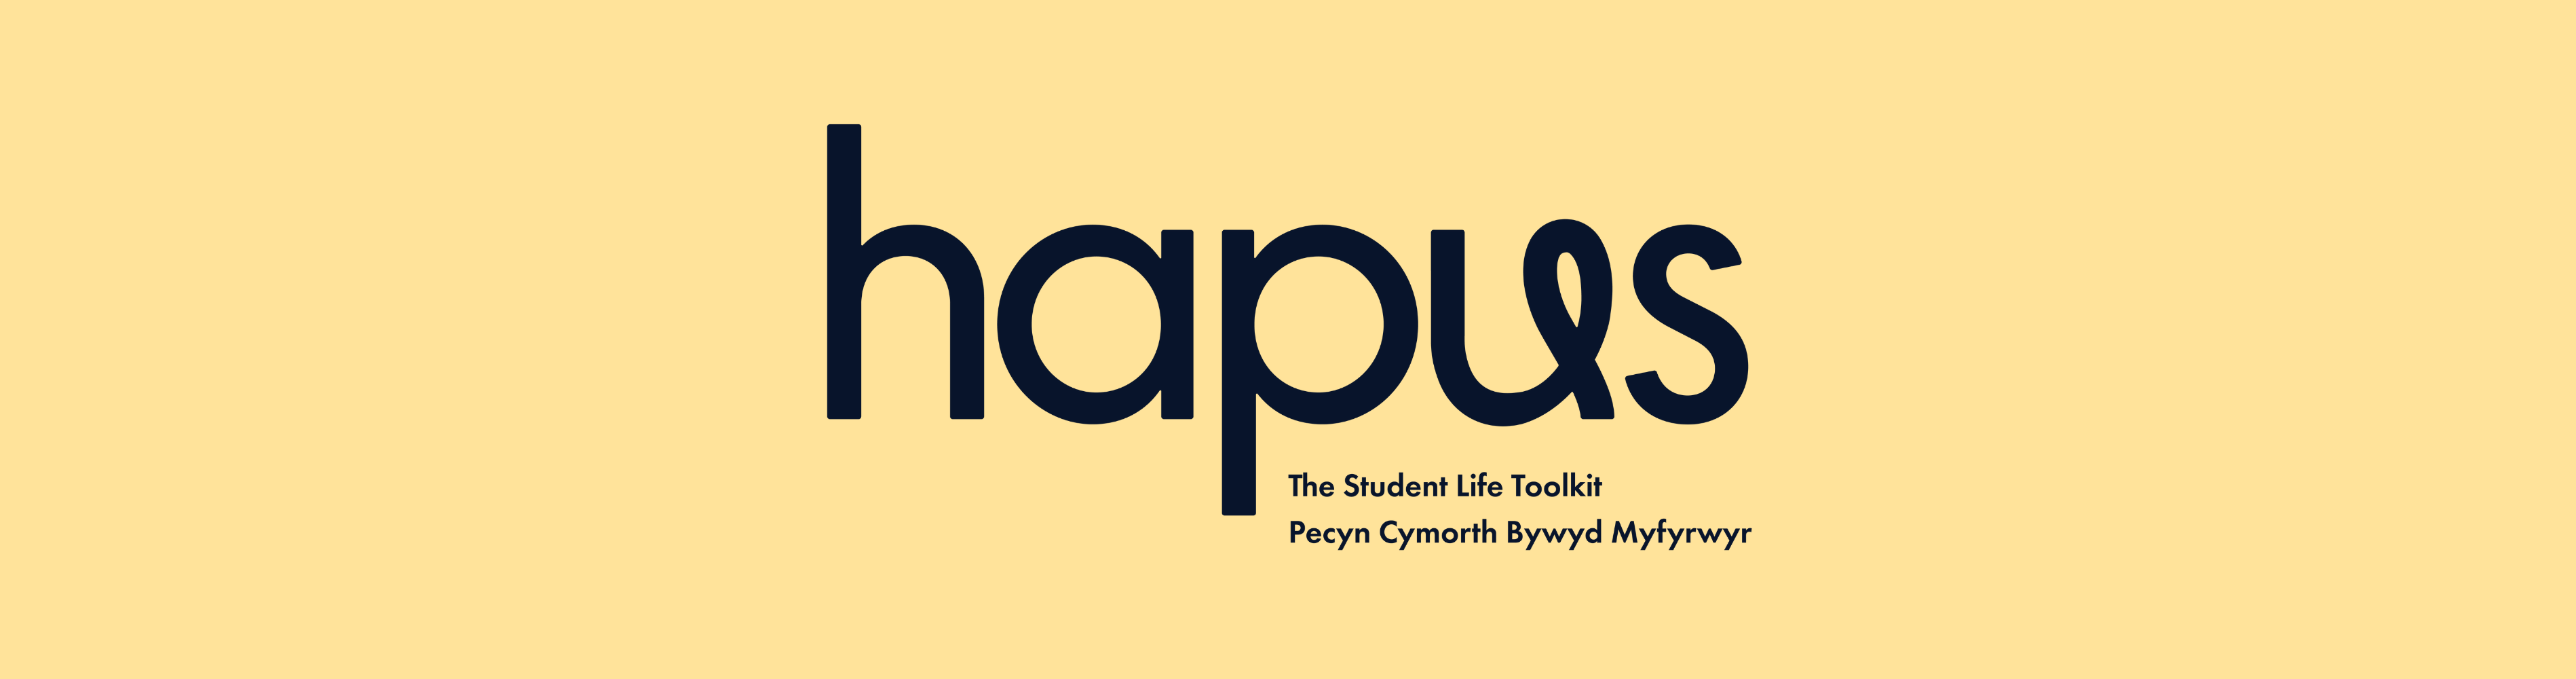 Hapus - The Student Life Toolkit logo